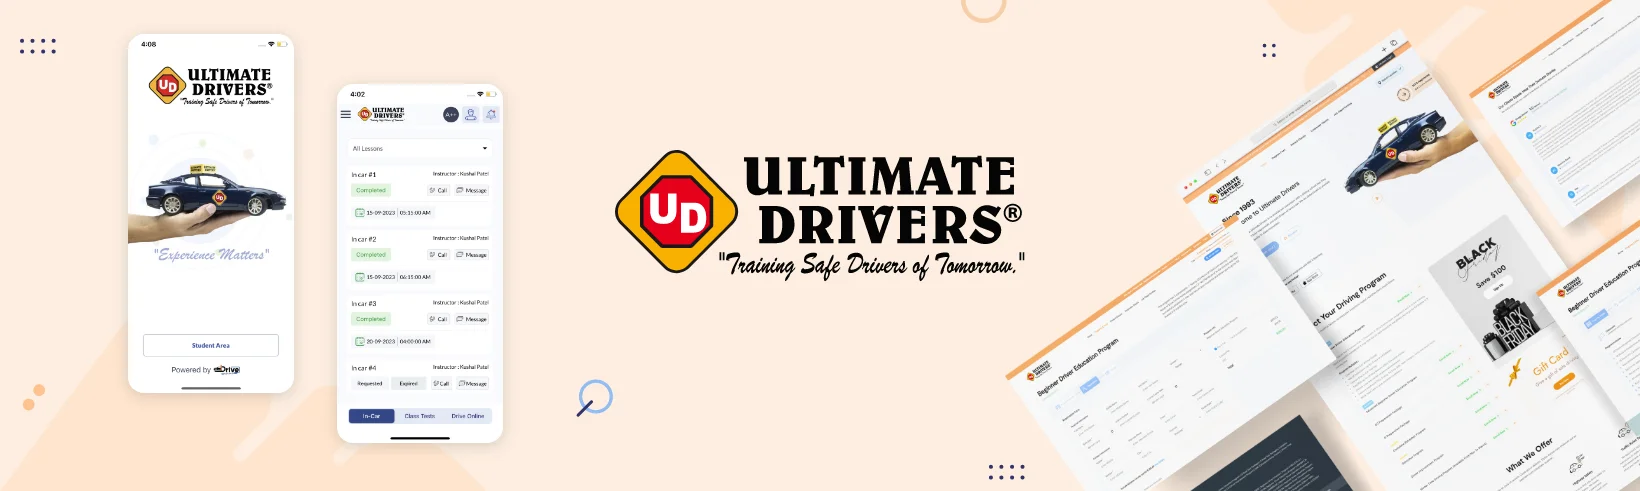 image-case-study-ultimate-drivers-big